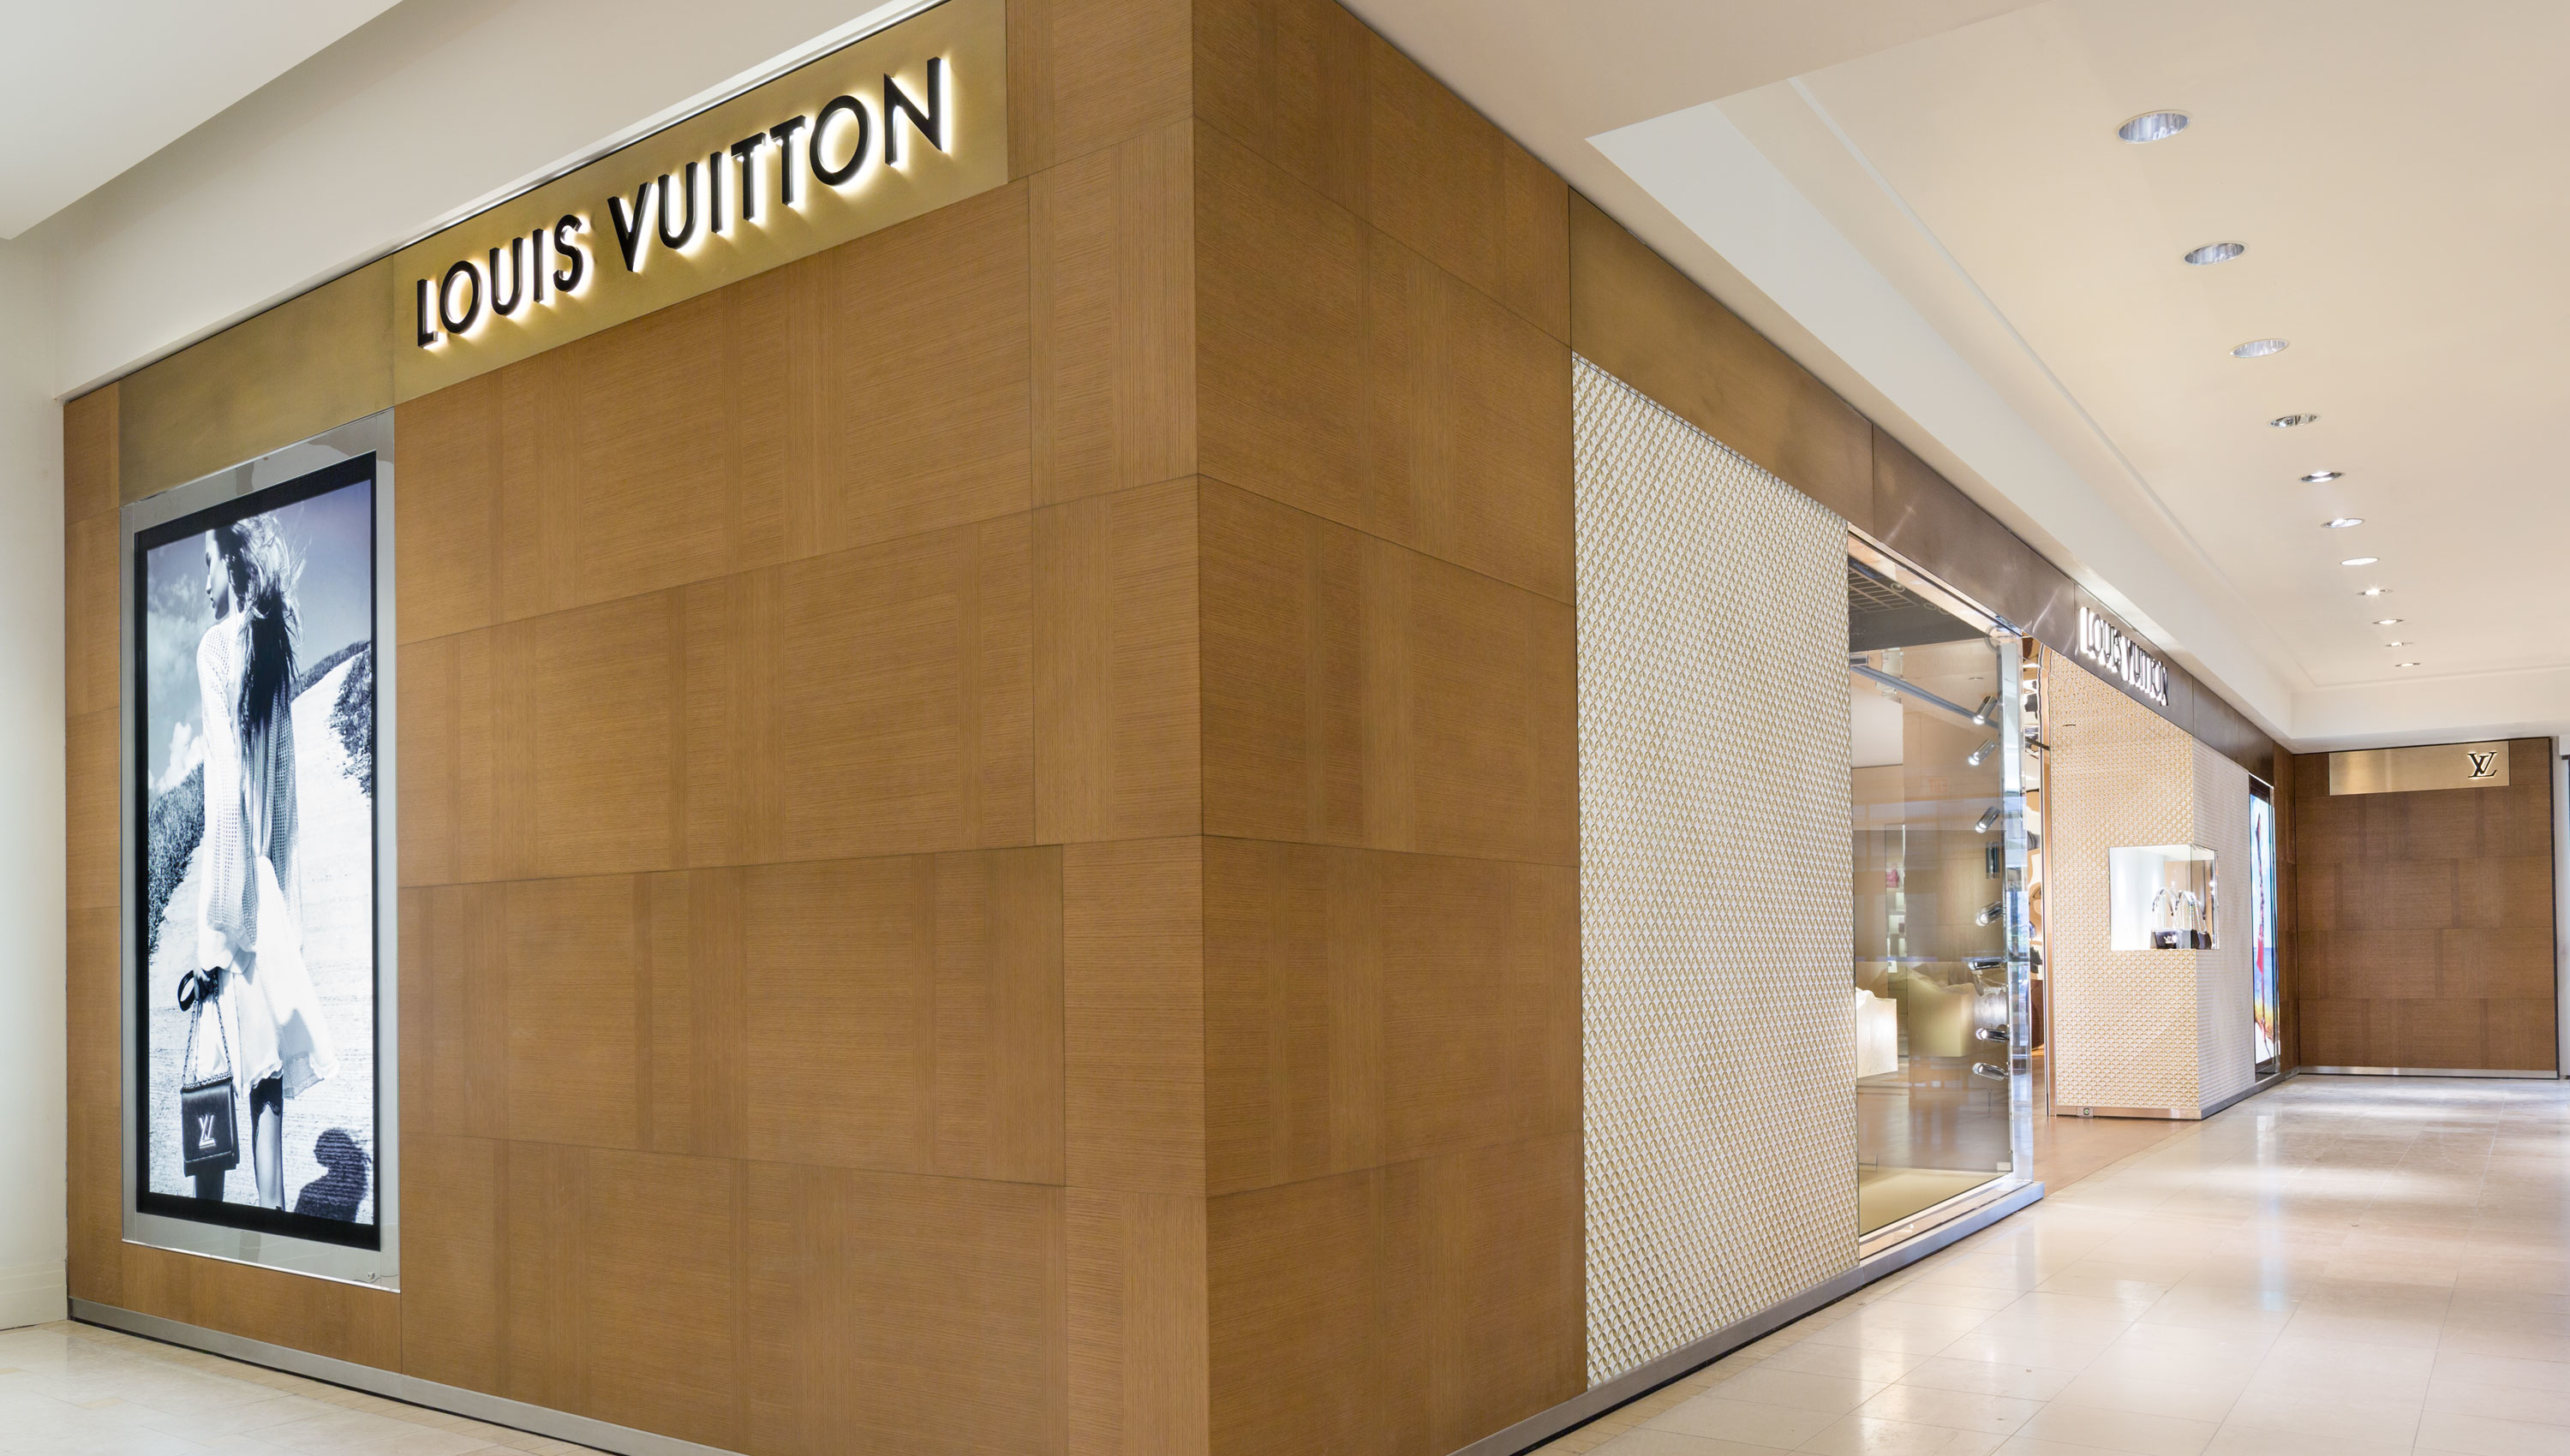 Louis Vuitton Cleveland Saks Photo